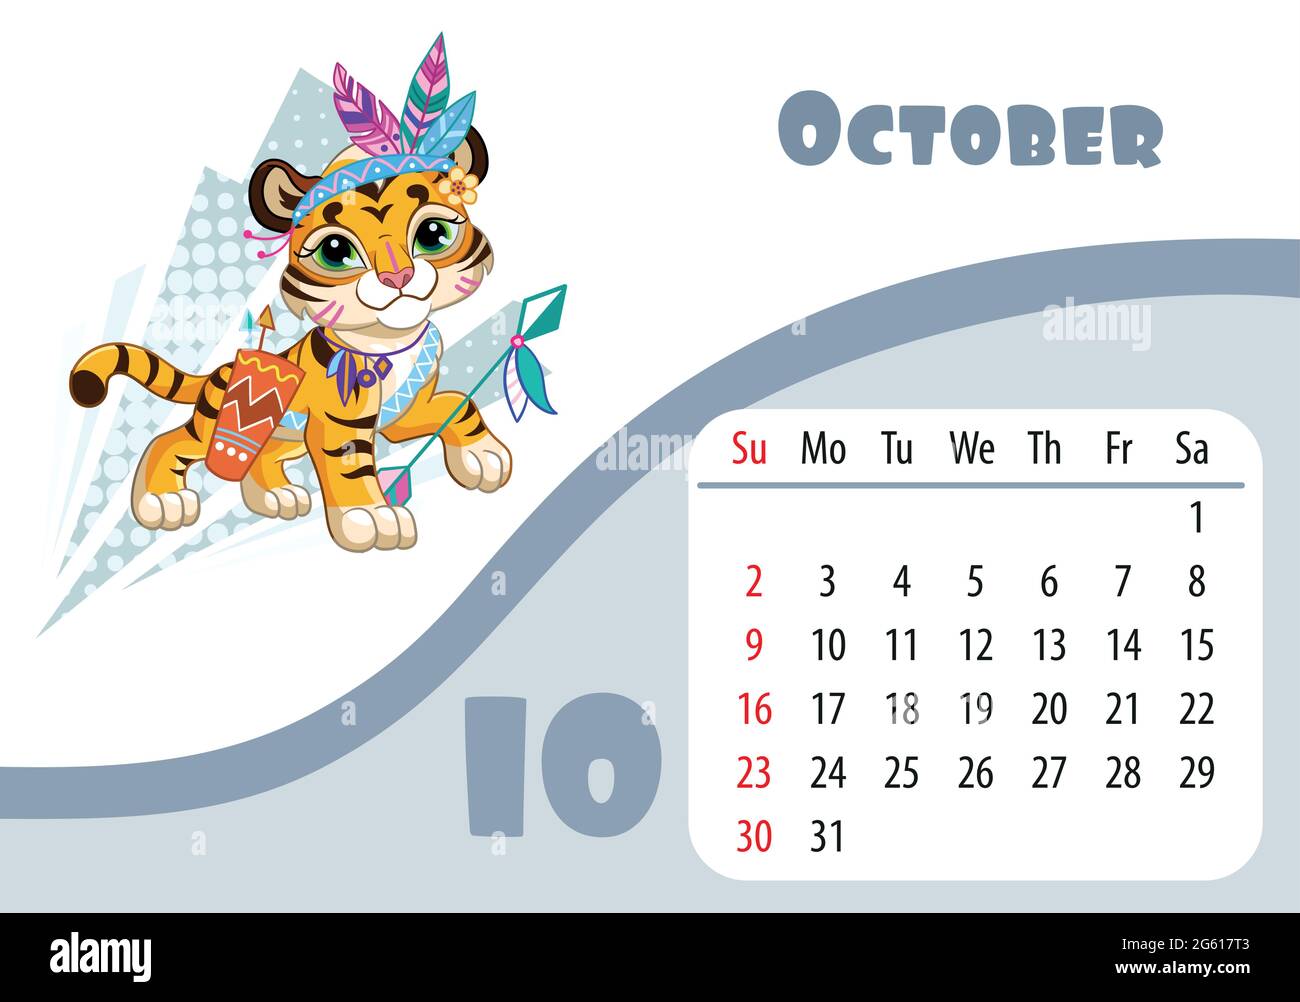 Halloween 2022 Calendar Horizontal Desktop Childrens Calendar Design For October 2022, The Year Of  The Tiger In The Chinese Calendar. Cute Tiger Cub In Halloween Indian Costu  Stock Vector Image & Art - Alamy